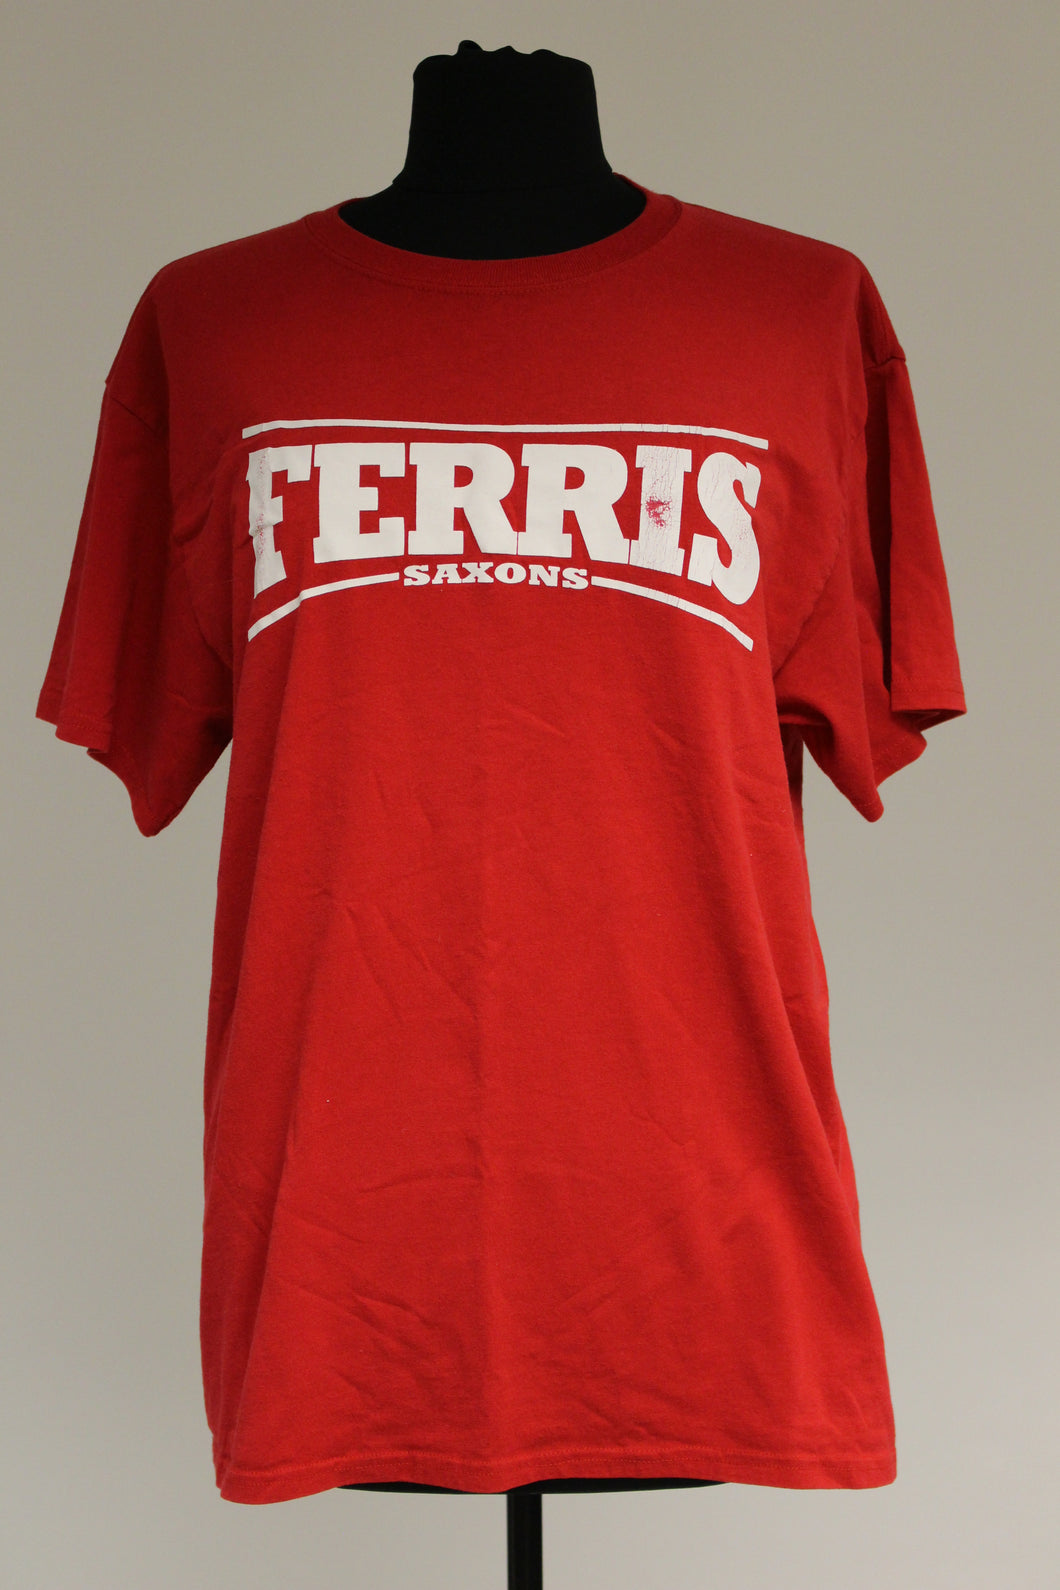 Ferris Saxons PRIDE T-Shirt, Size: Adult Large